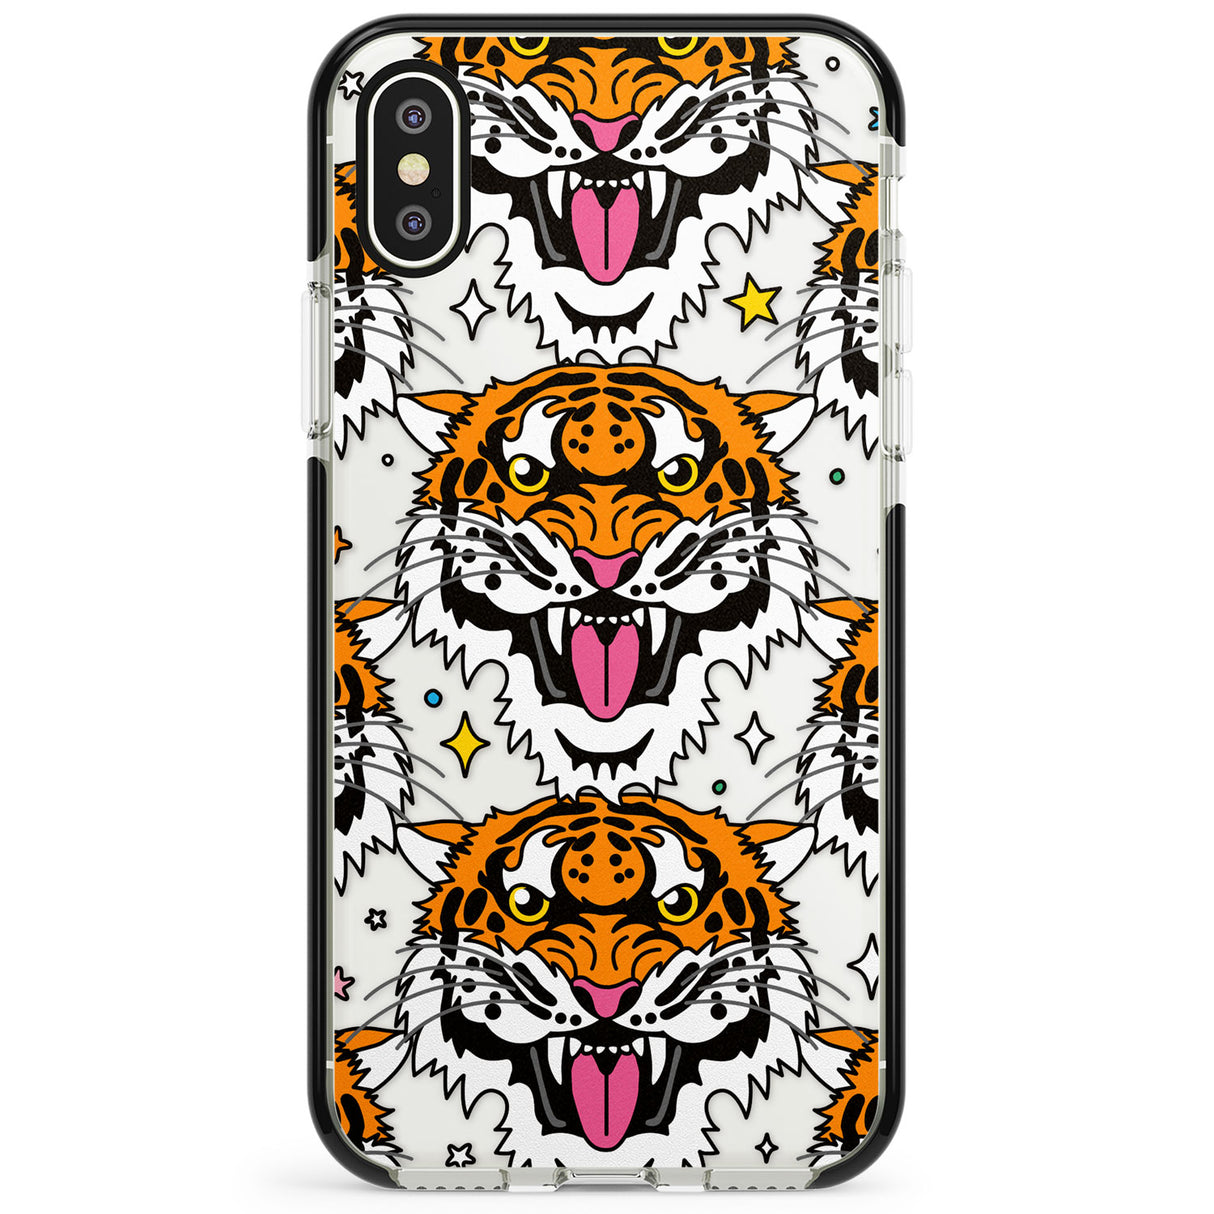 Fierce Jungle Tigers Phone Case for iPhone X XS Max XR